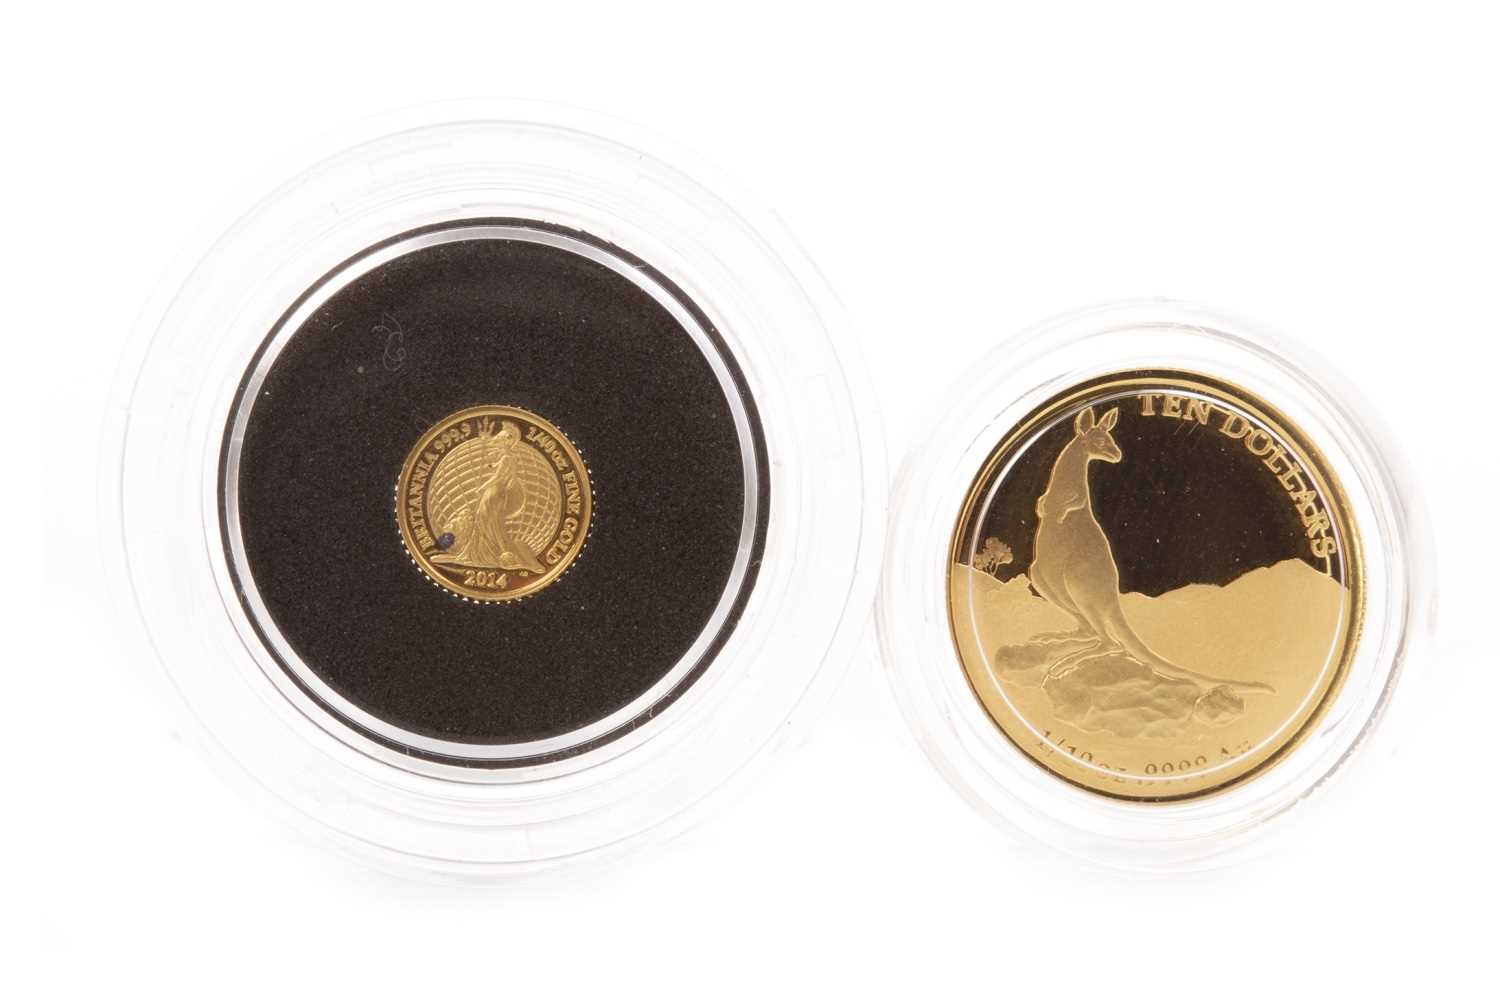 Lot 574 - A GOLD AUSTRALIA 10 DOLLAR COIN AND A GOLD BRITANNIA COIN